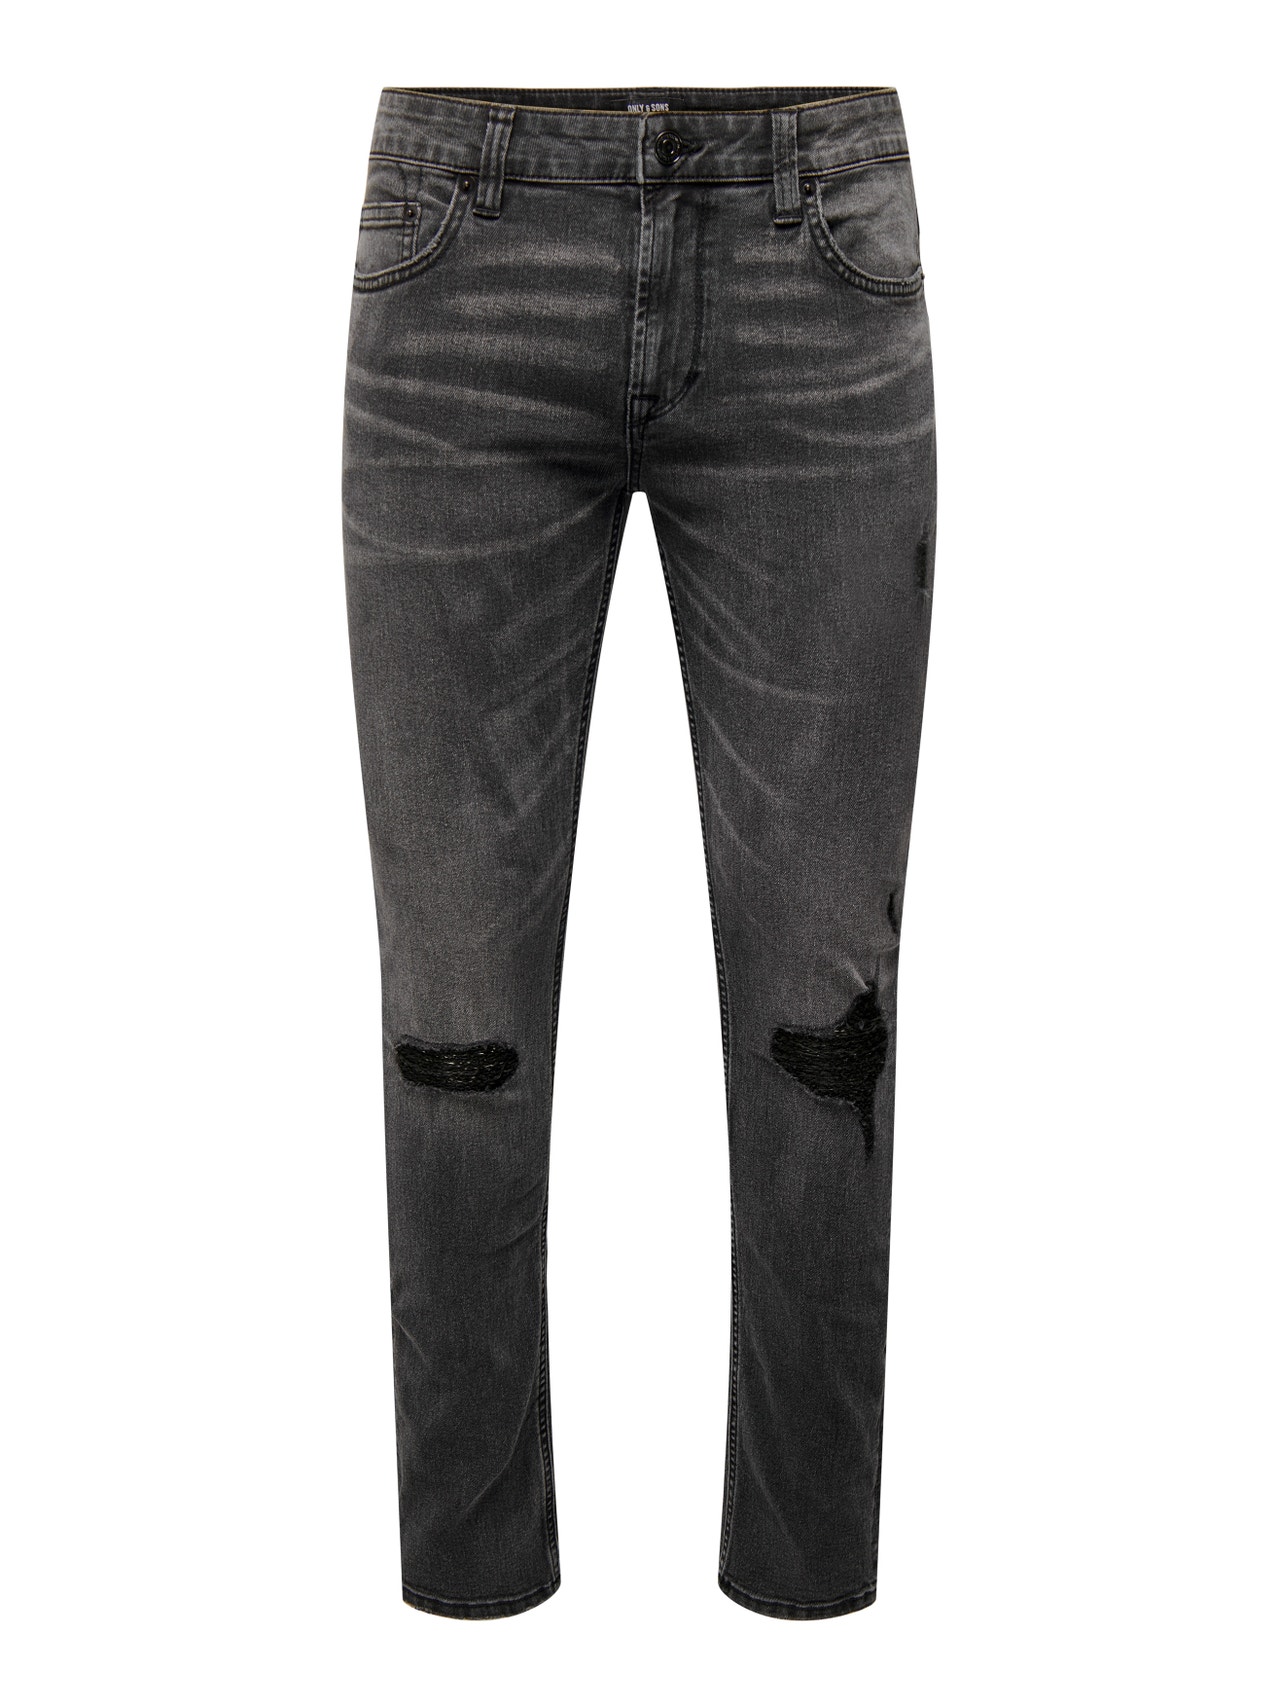 ONLY & SONS ONSLoom Slim Grey Denim Jeans -Dark Grey Denim - 22026457